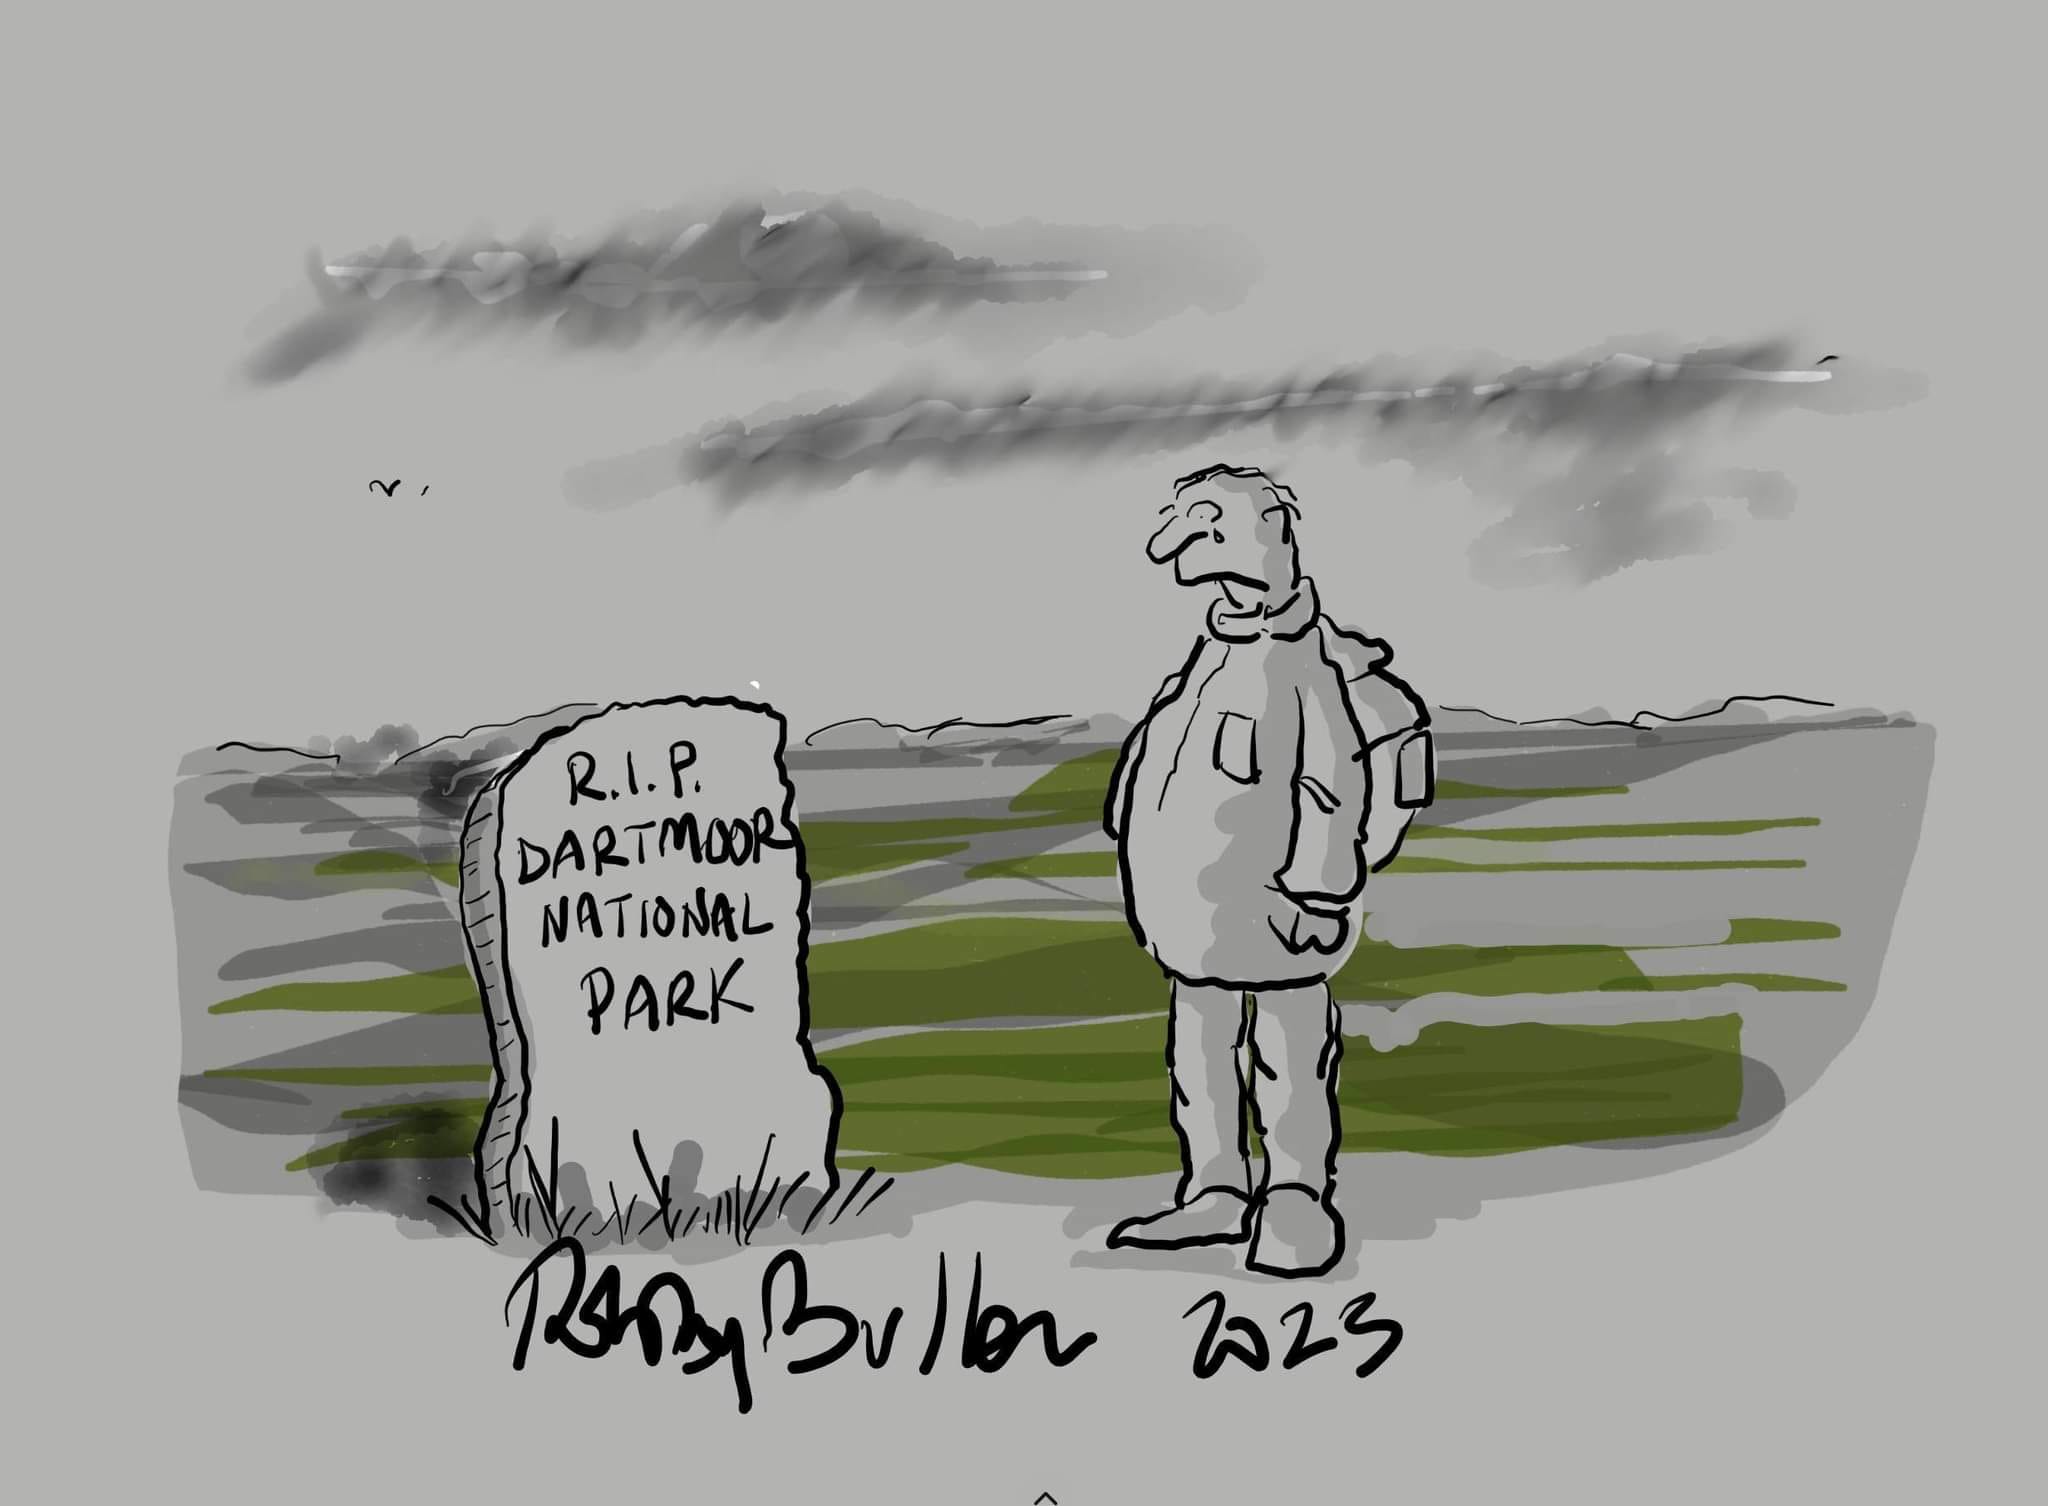 Rob Bullen cartoon: Dartmoor National Park R.I.P